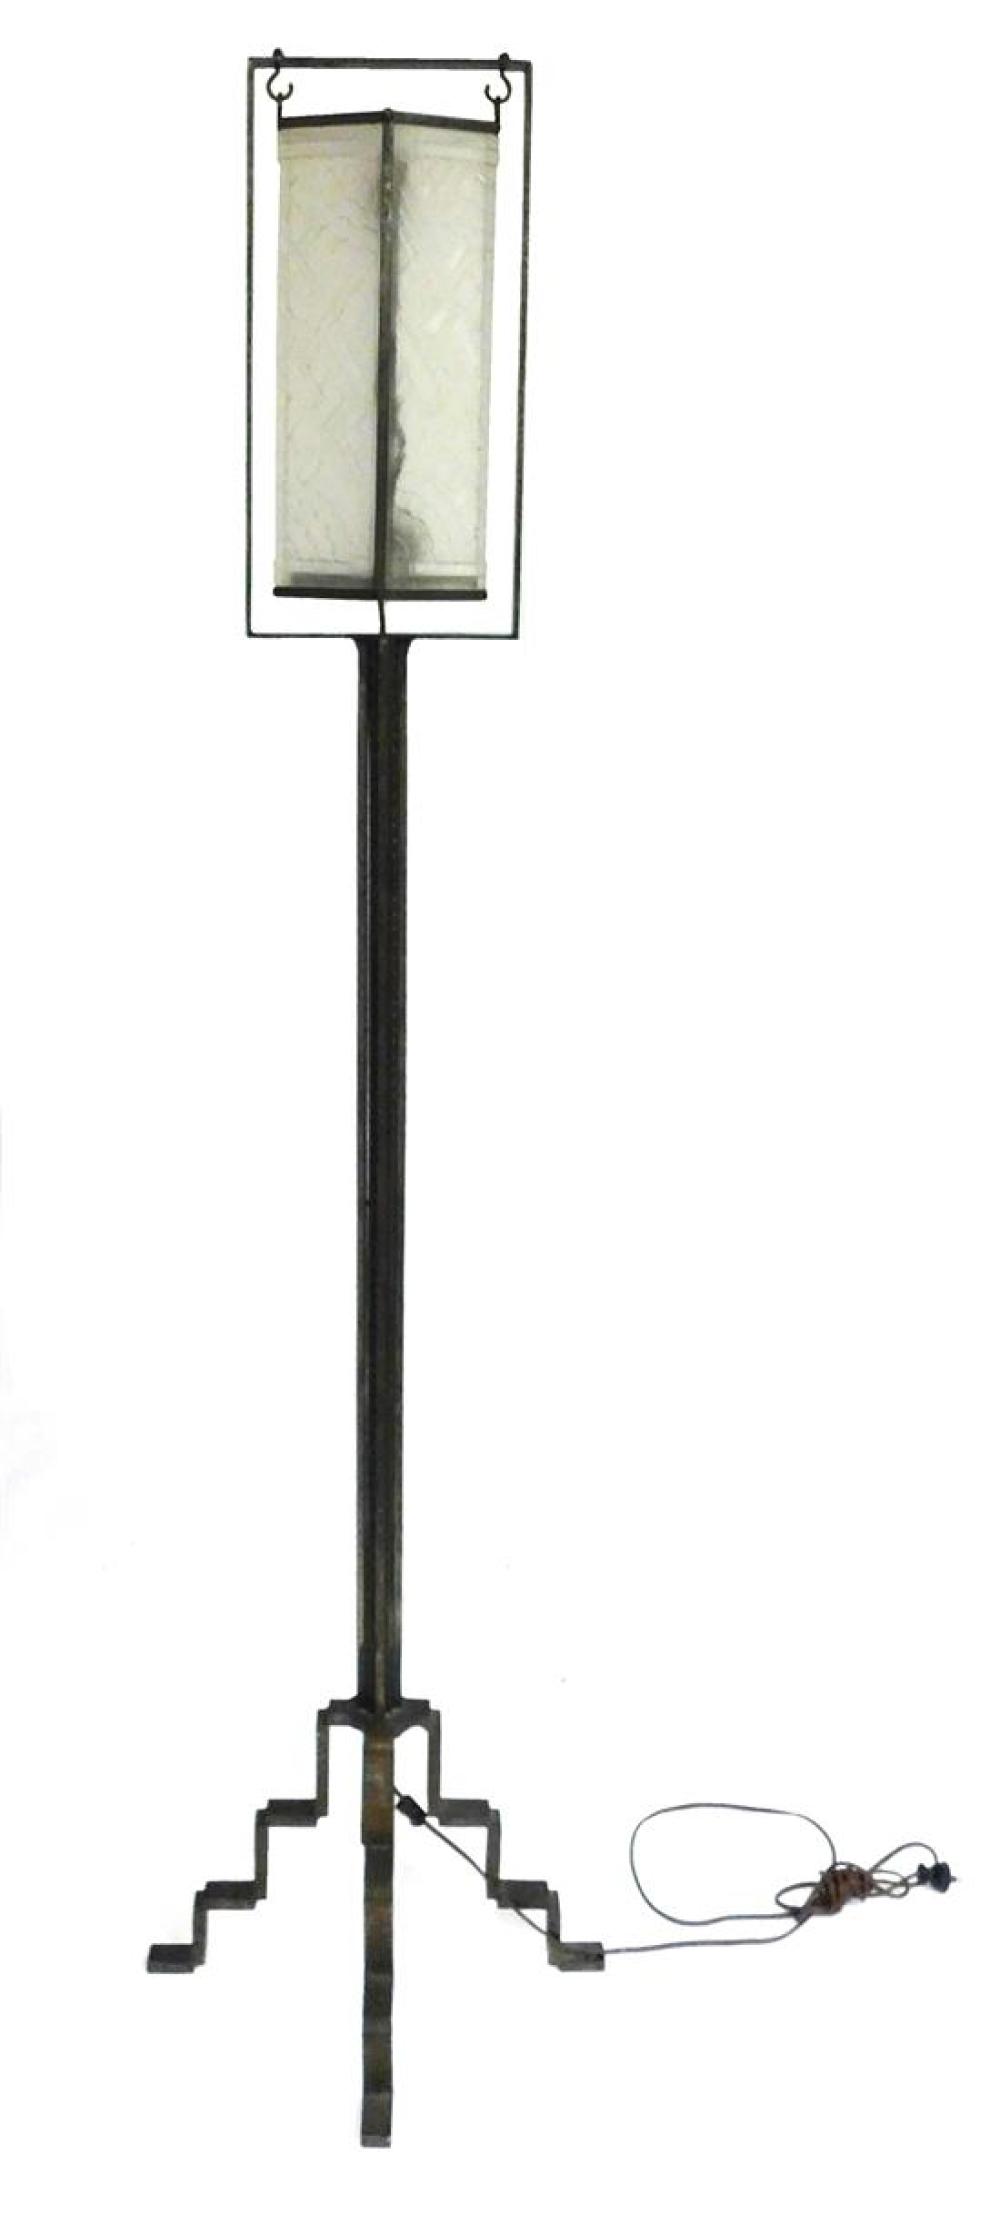 ART DECO STYLE FLOOR LAMP LANTERN 31b85f